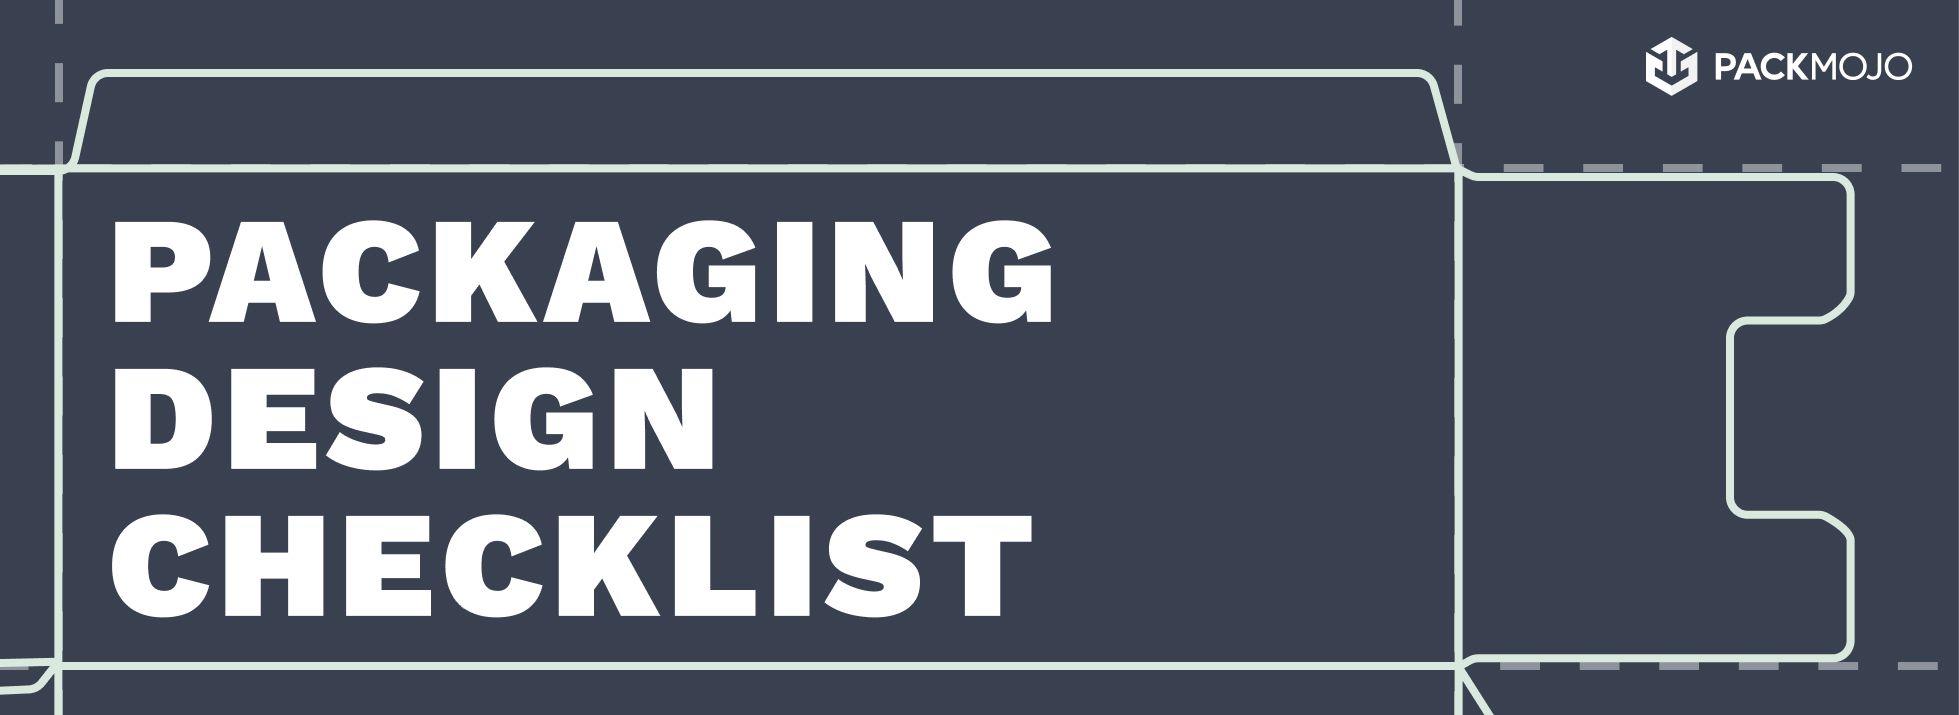 Packaging Design Checklist Header Image